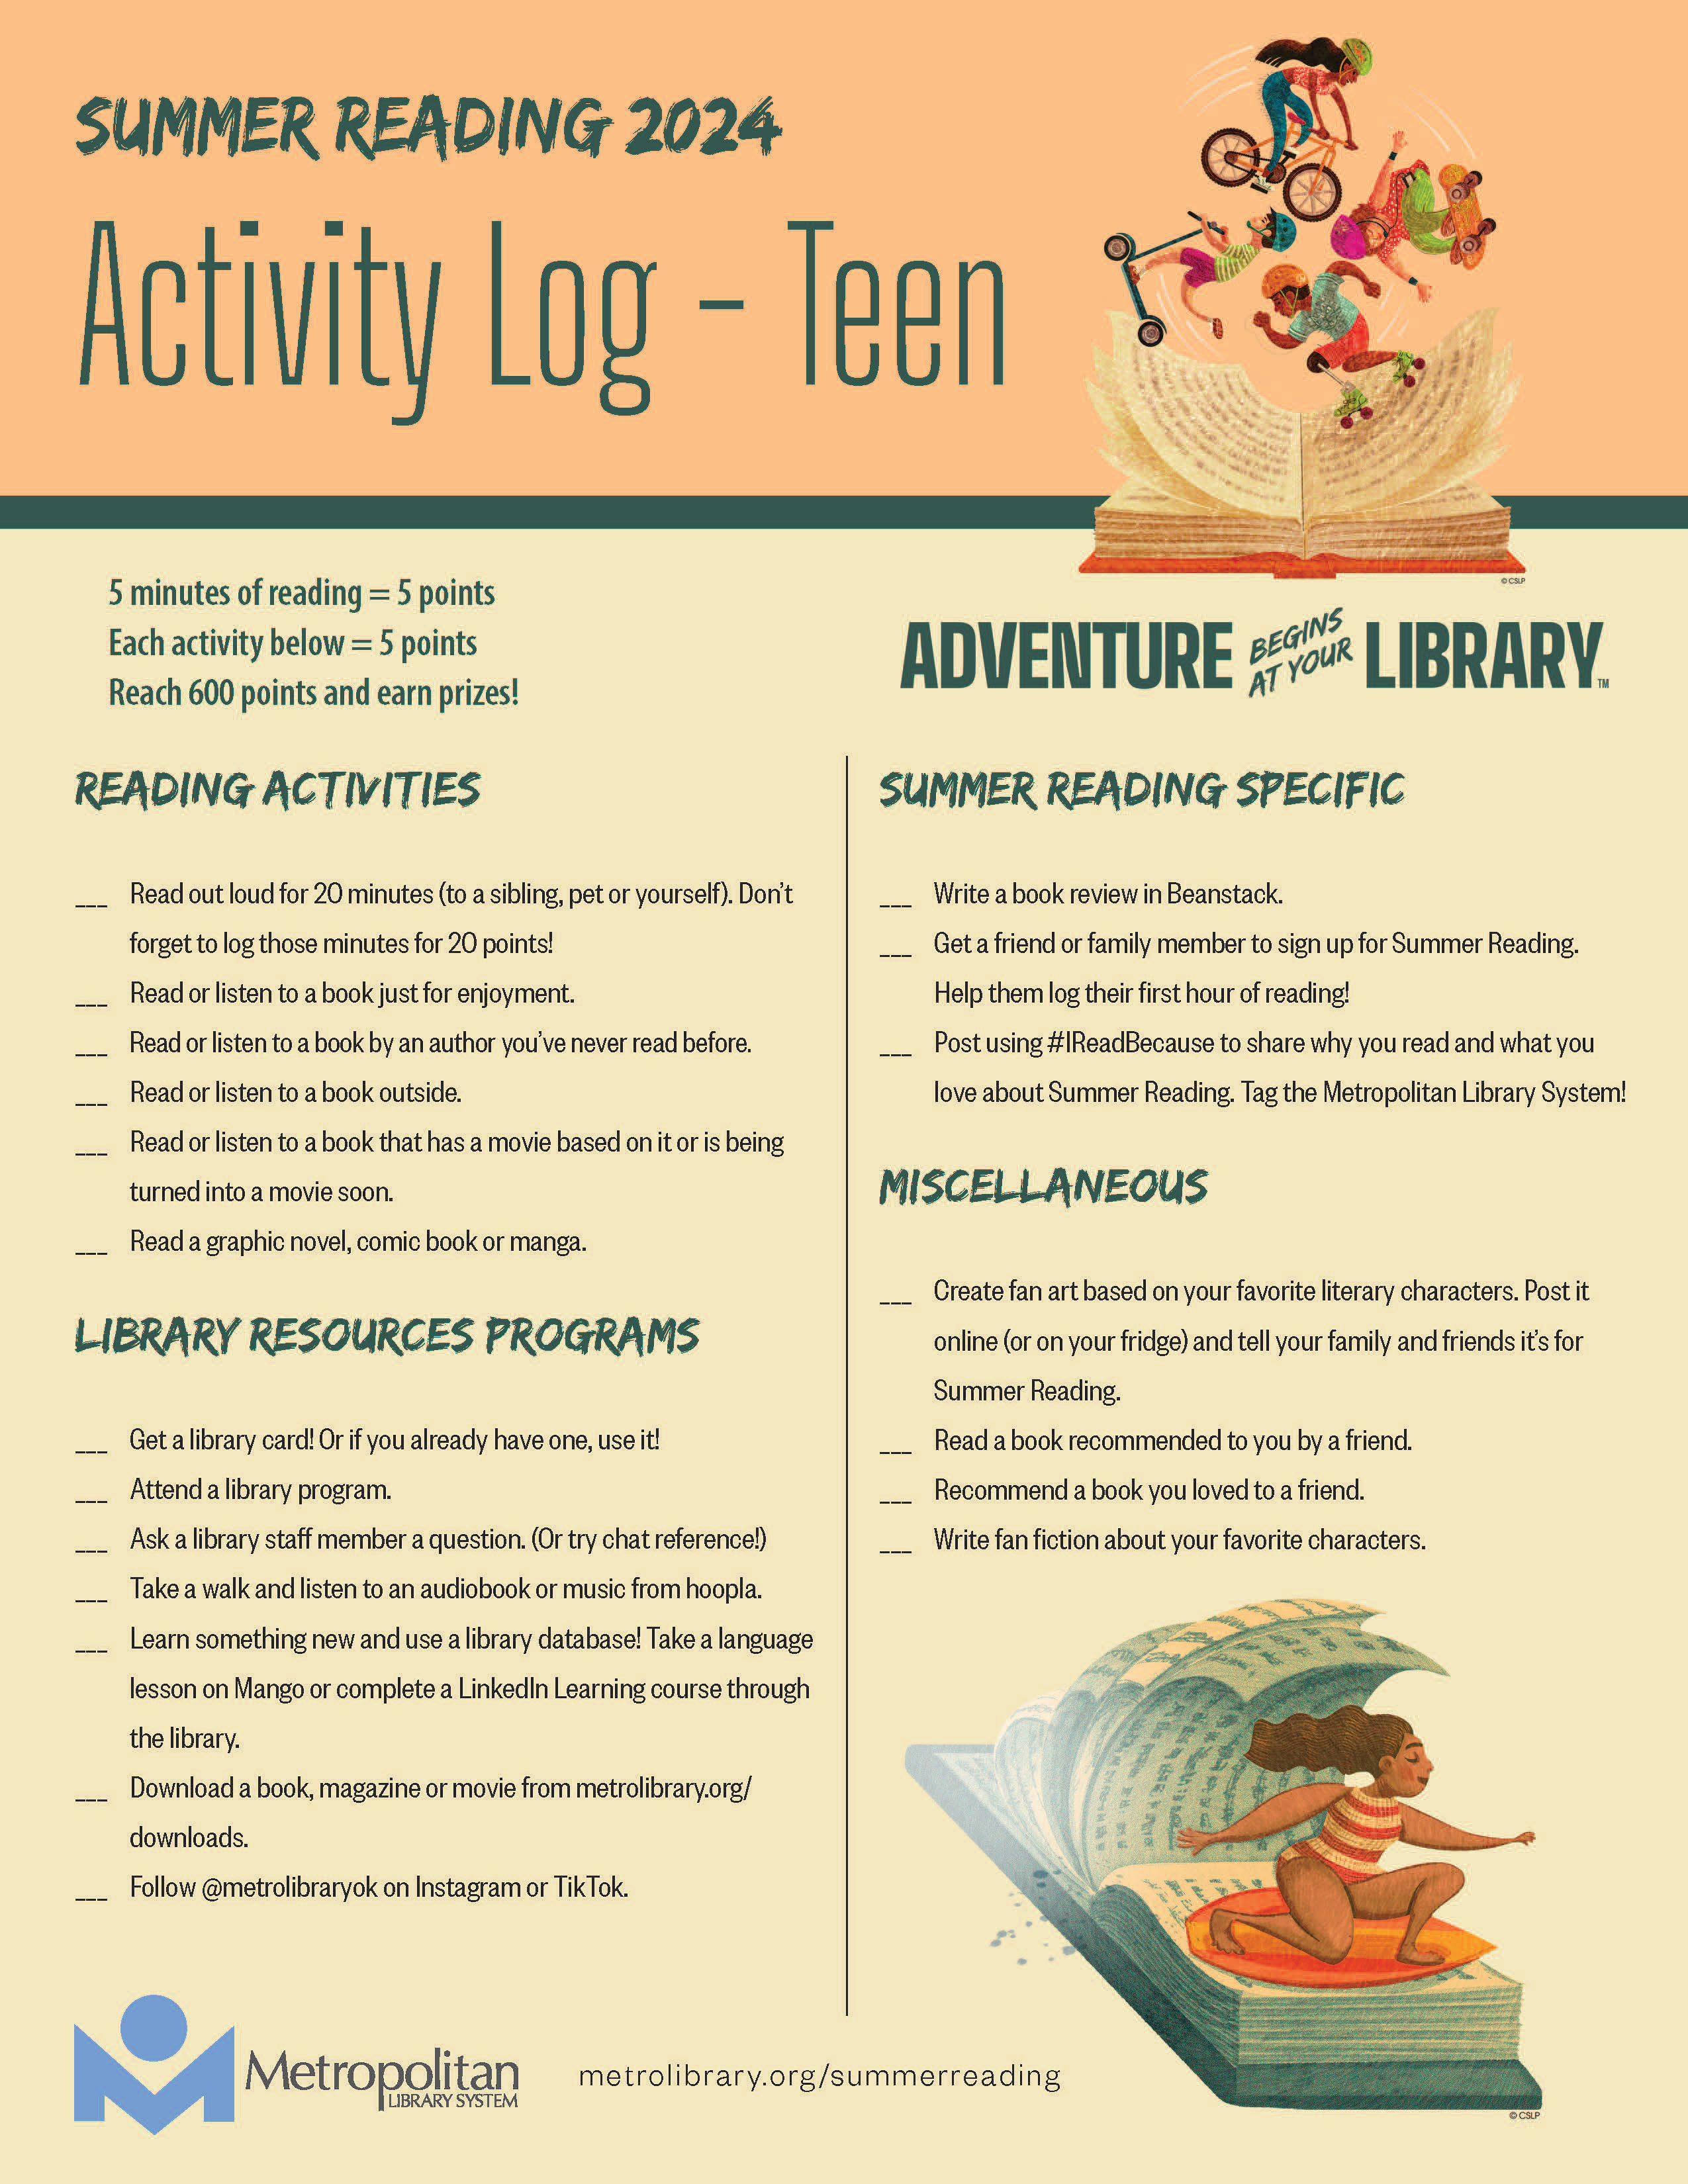 Activity Log - Teen